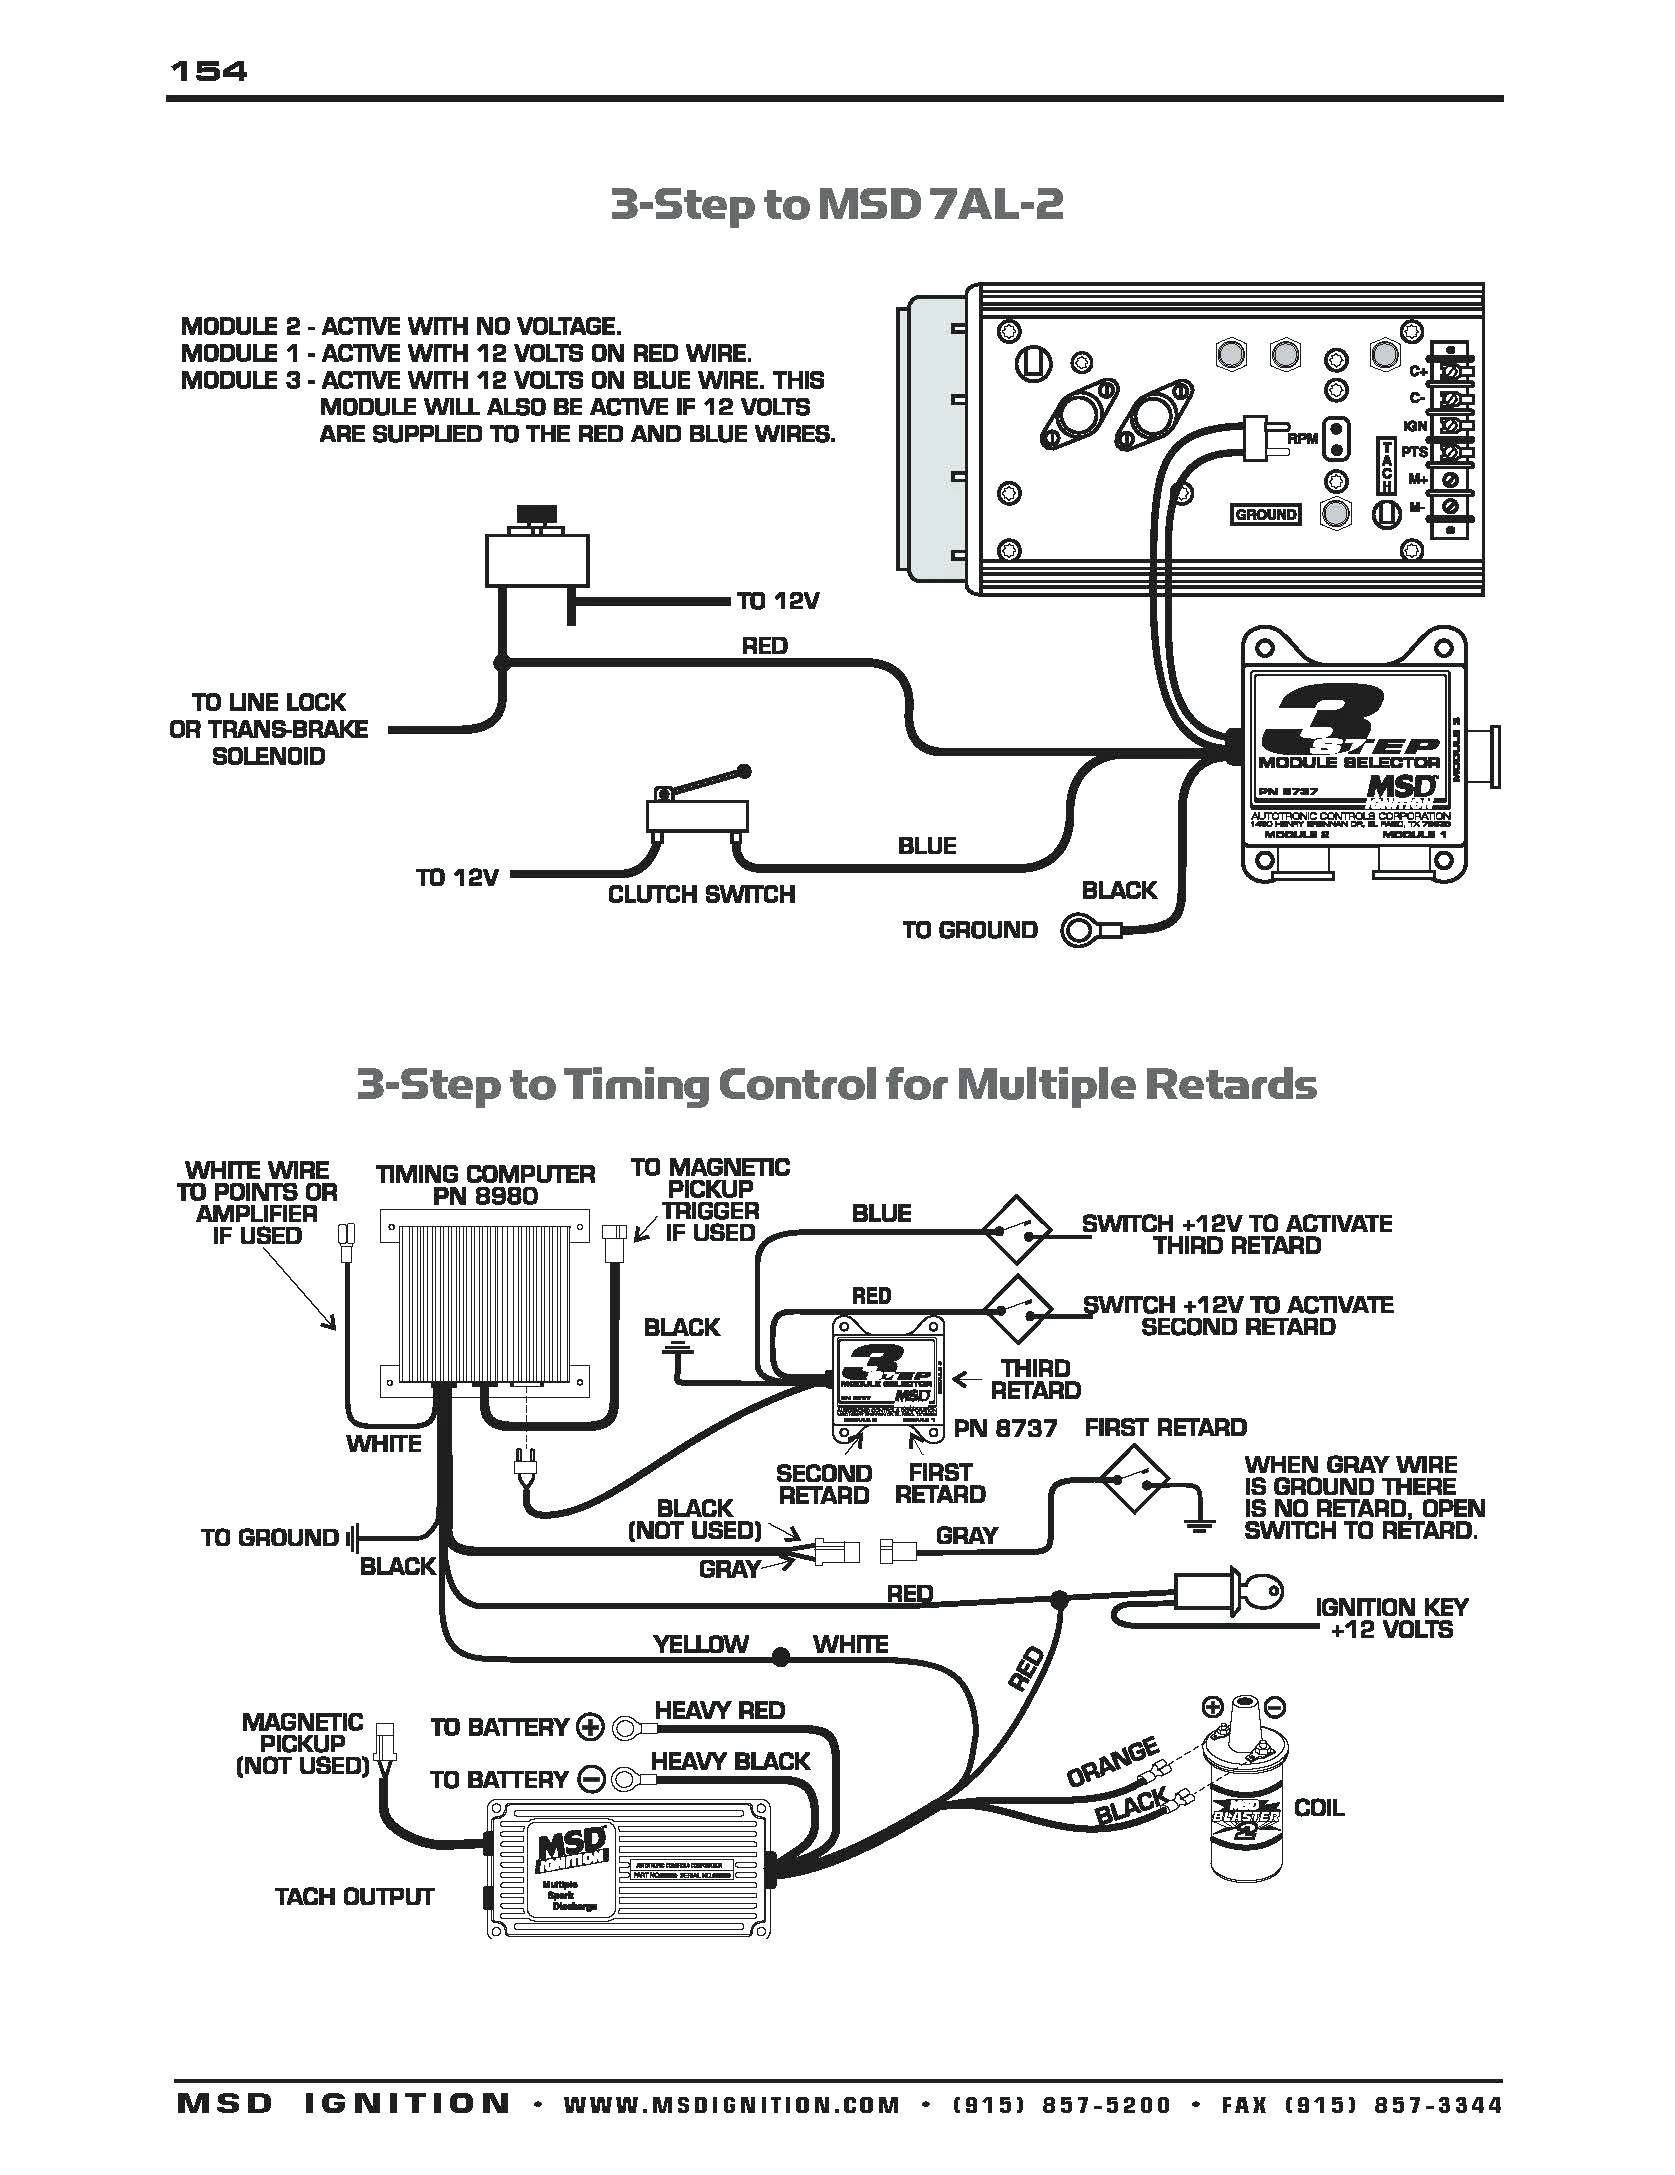 mopar starter relay wiring diagram new chrysler wiring diagram symbols new msd wiring harness chrysler of mopar starter relay wiring diagram